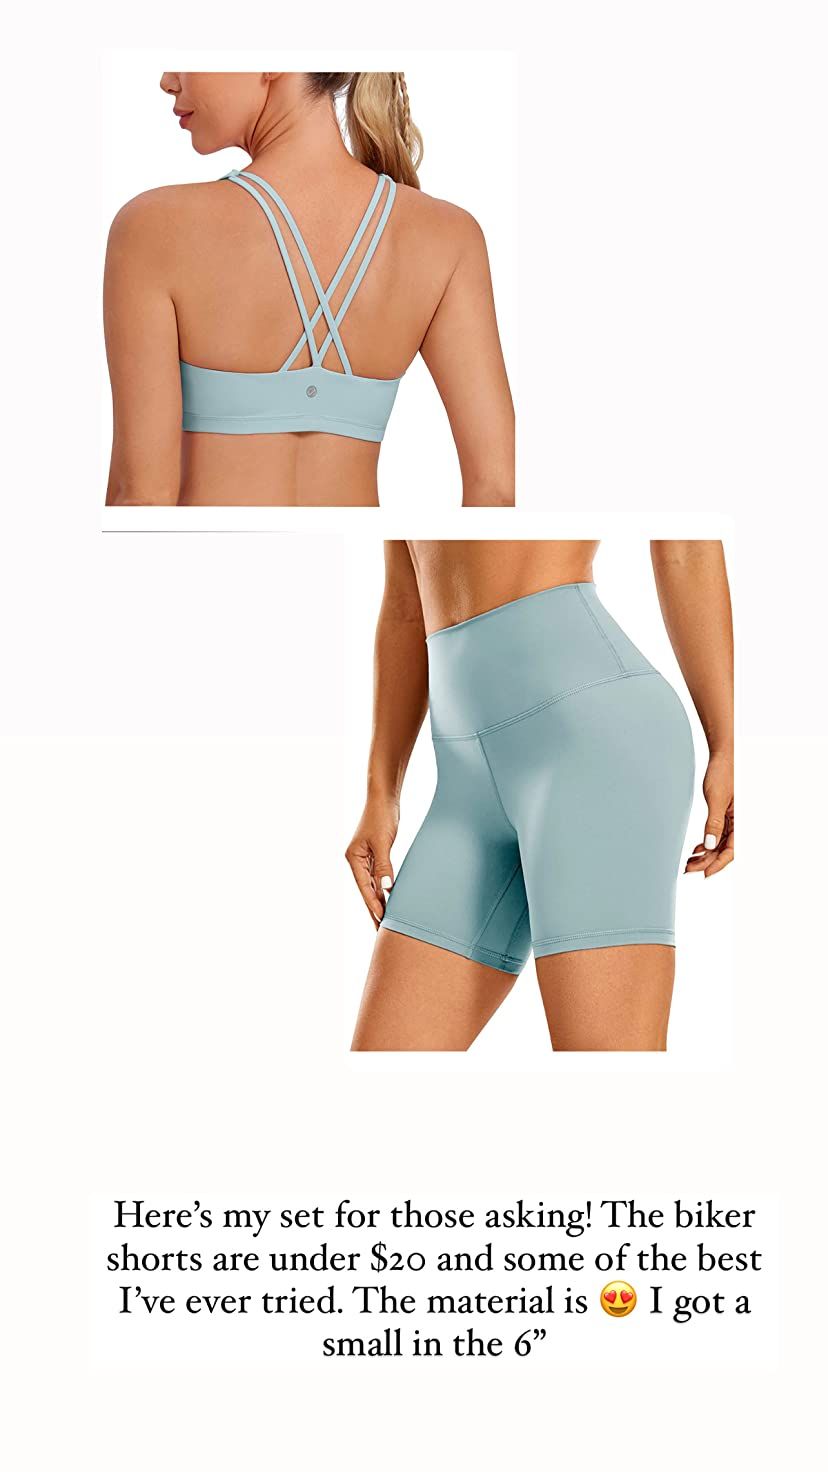 CRZ YOGA Strappy Longline Sports Bras for Women - Wirefree Padded Criss Cross Yoga Bras Cropped T... | Amazon (US)